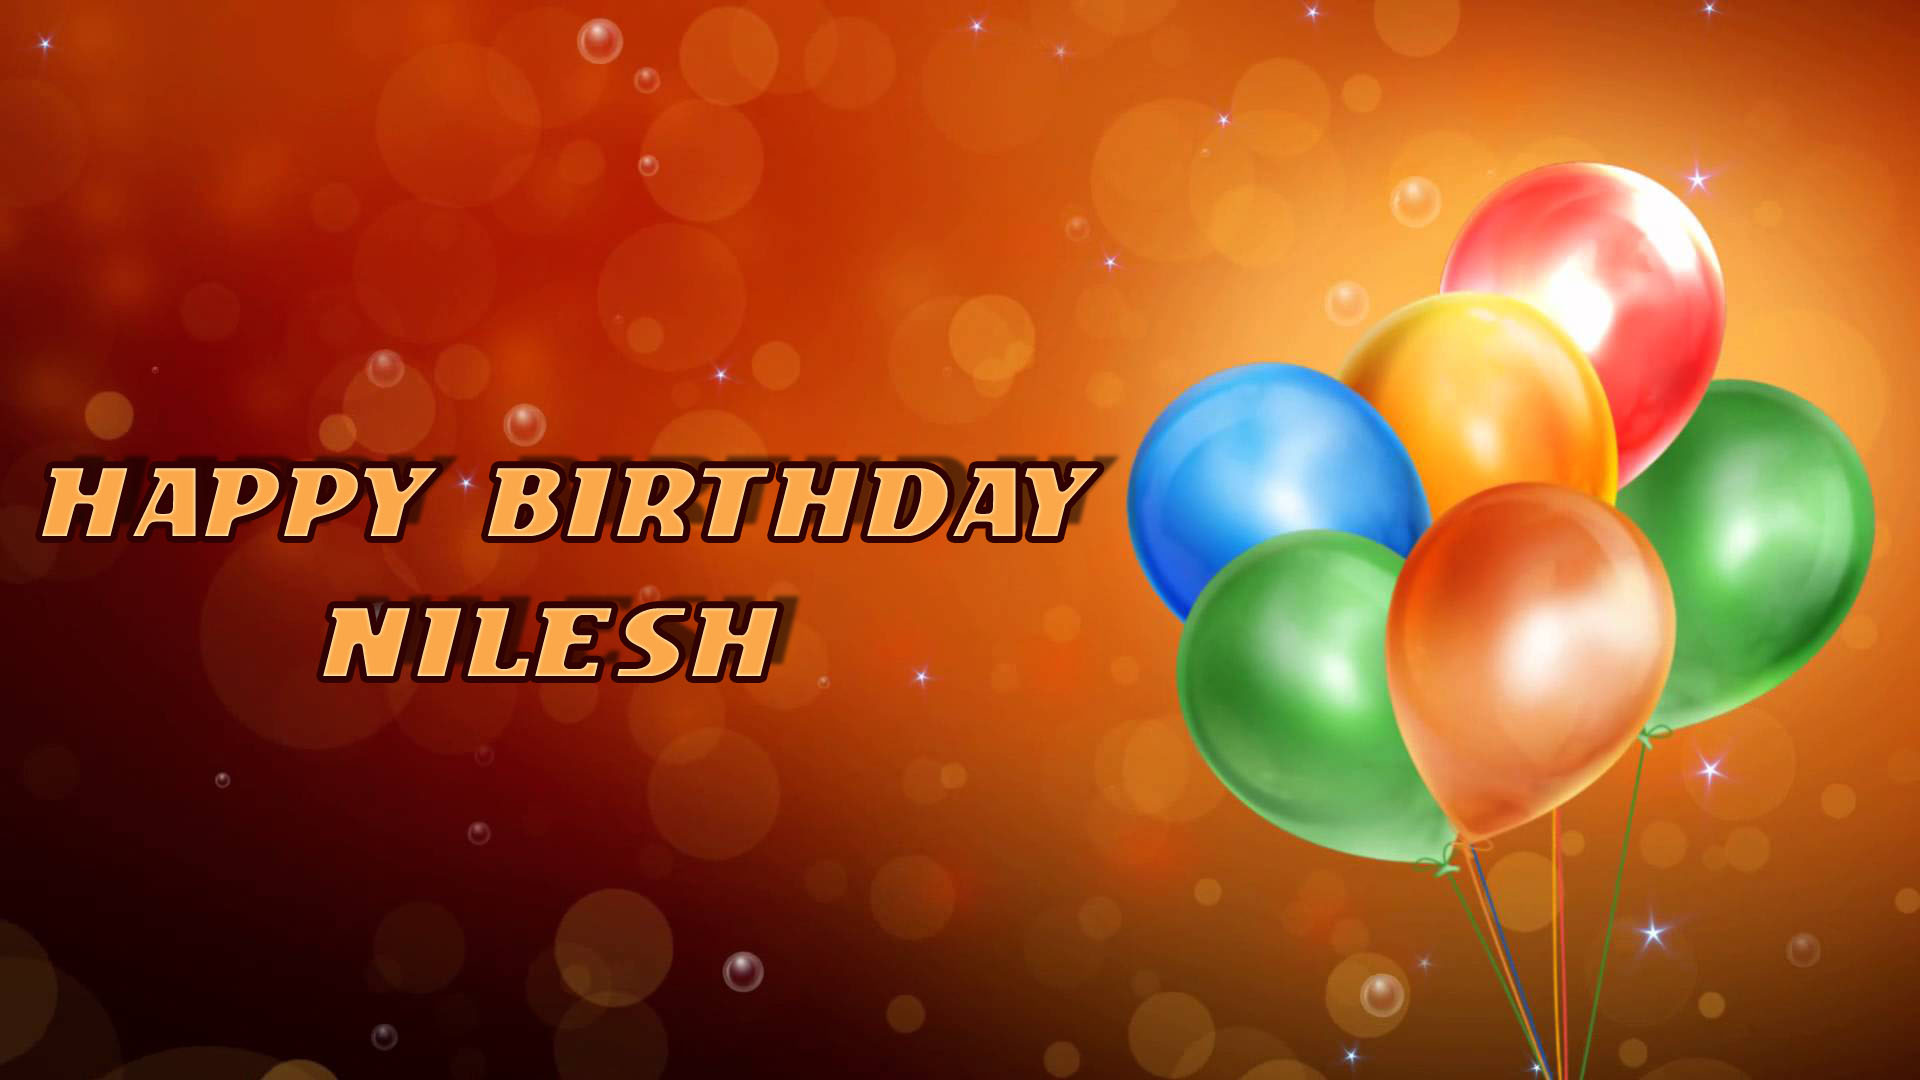 Happy Birthday Nilesh image